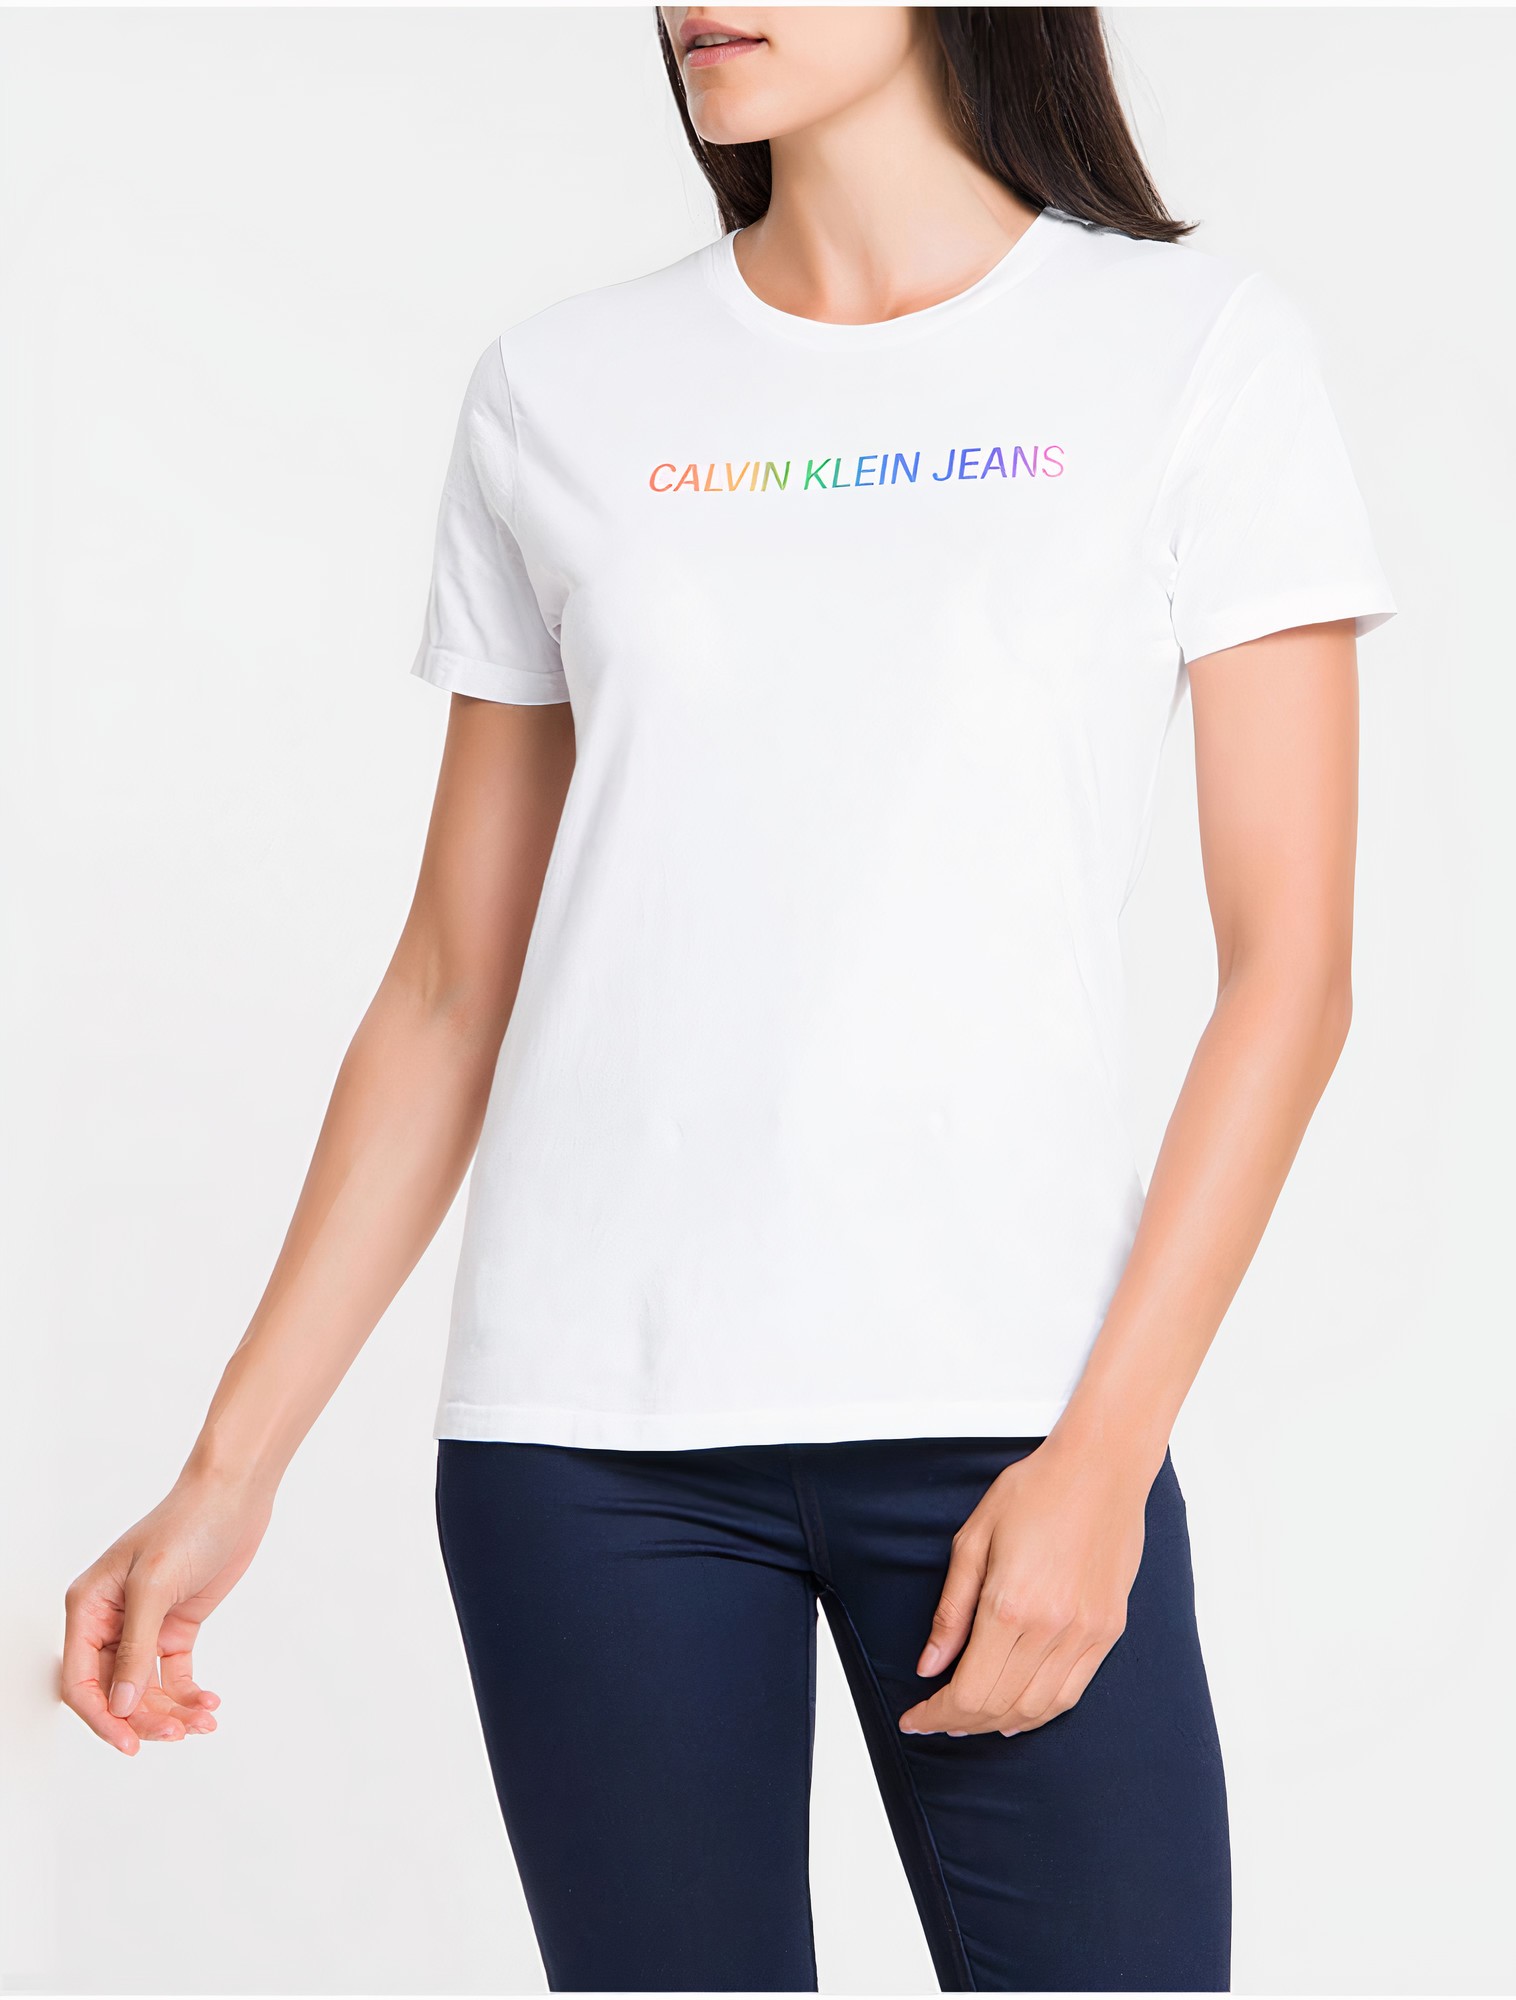 Camiseta Pride Calvin Klein (Foto: Divulgação)